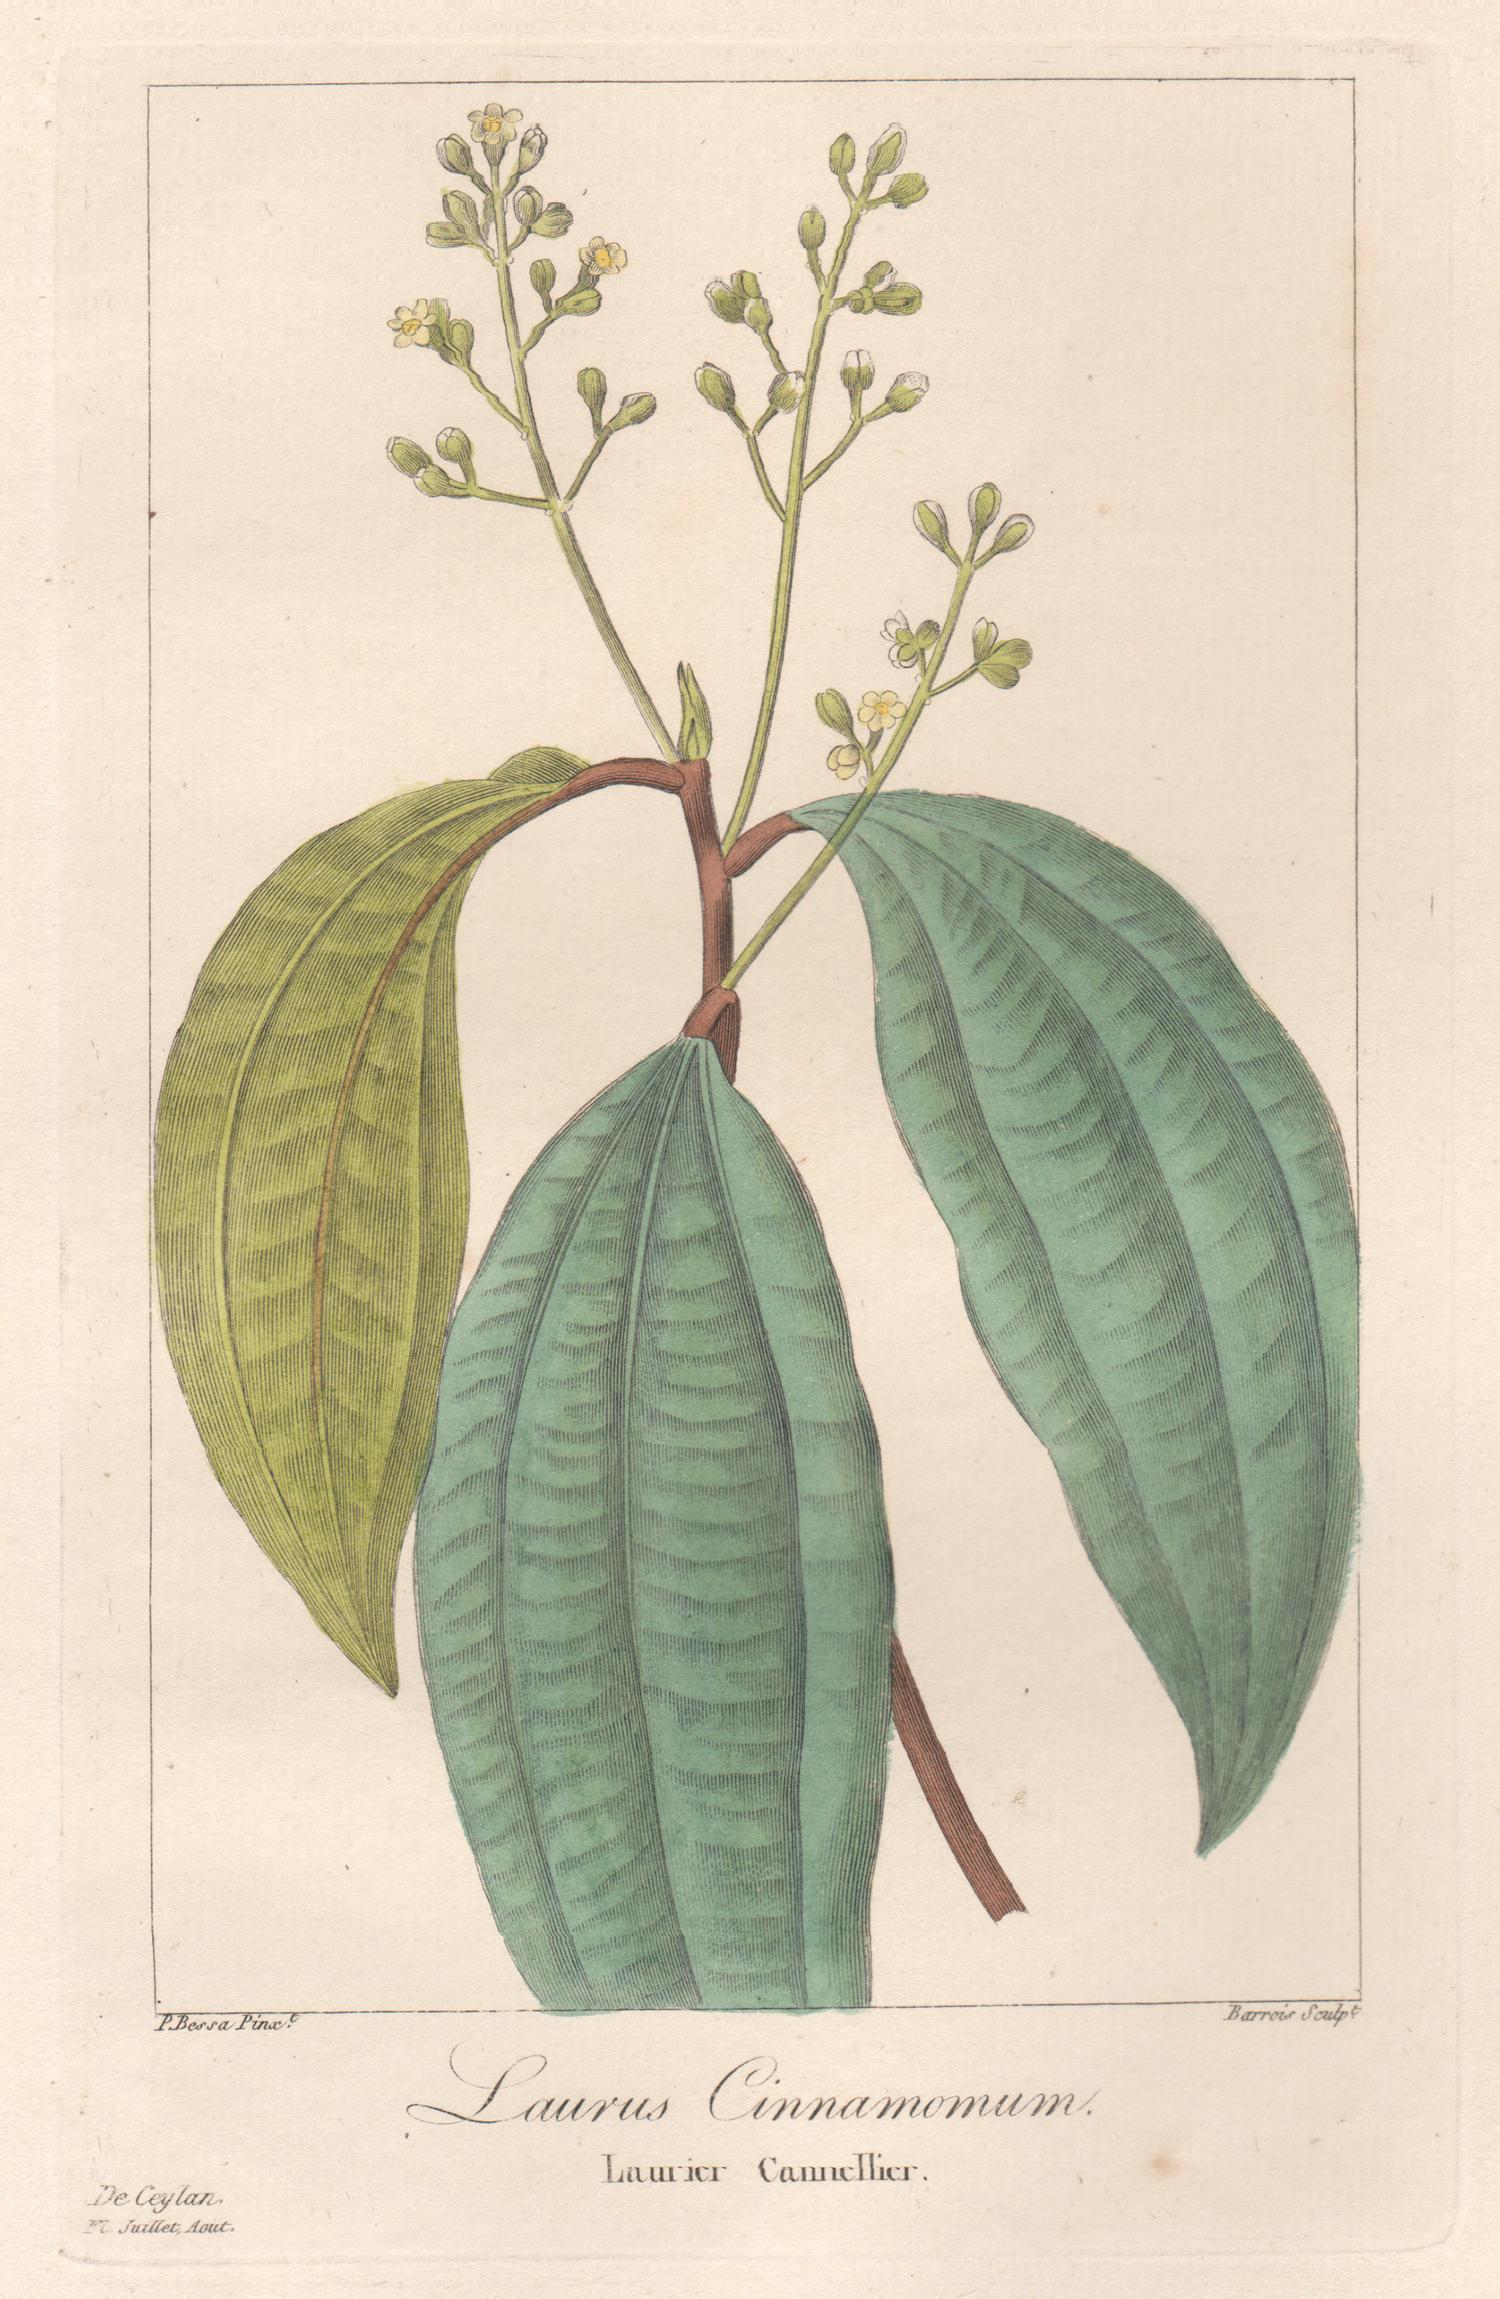 After Pancrace Bessa Still-Life Print - Laurus Cinnamomum - French botanical flower engraving by Bessa, c1830